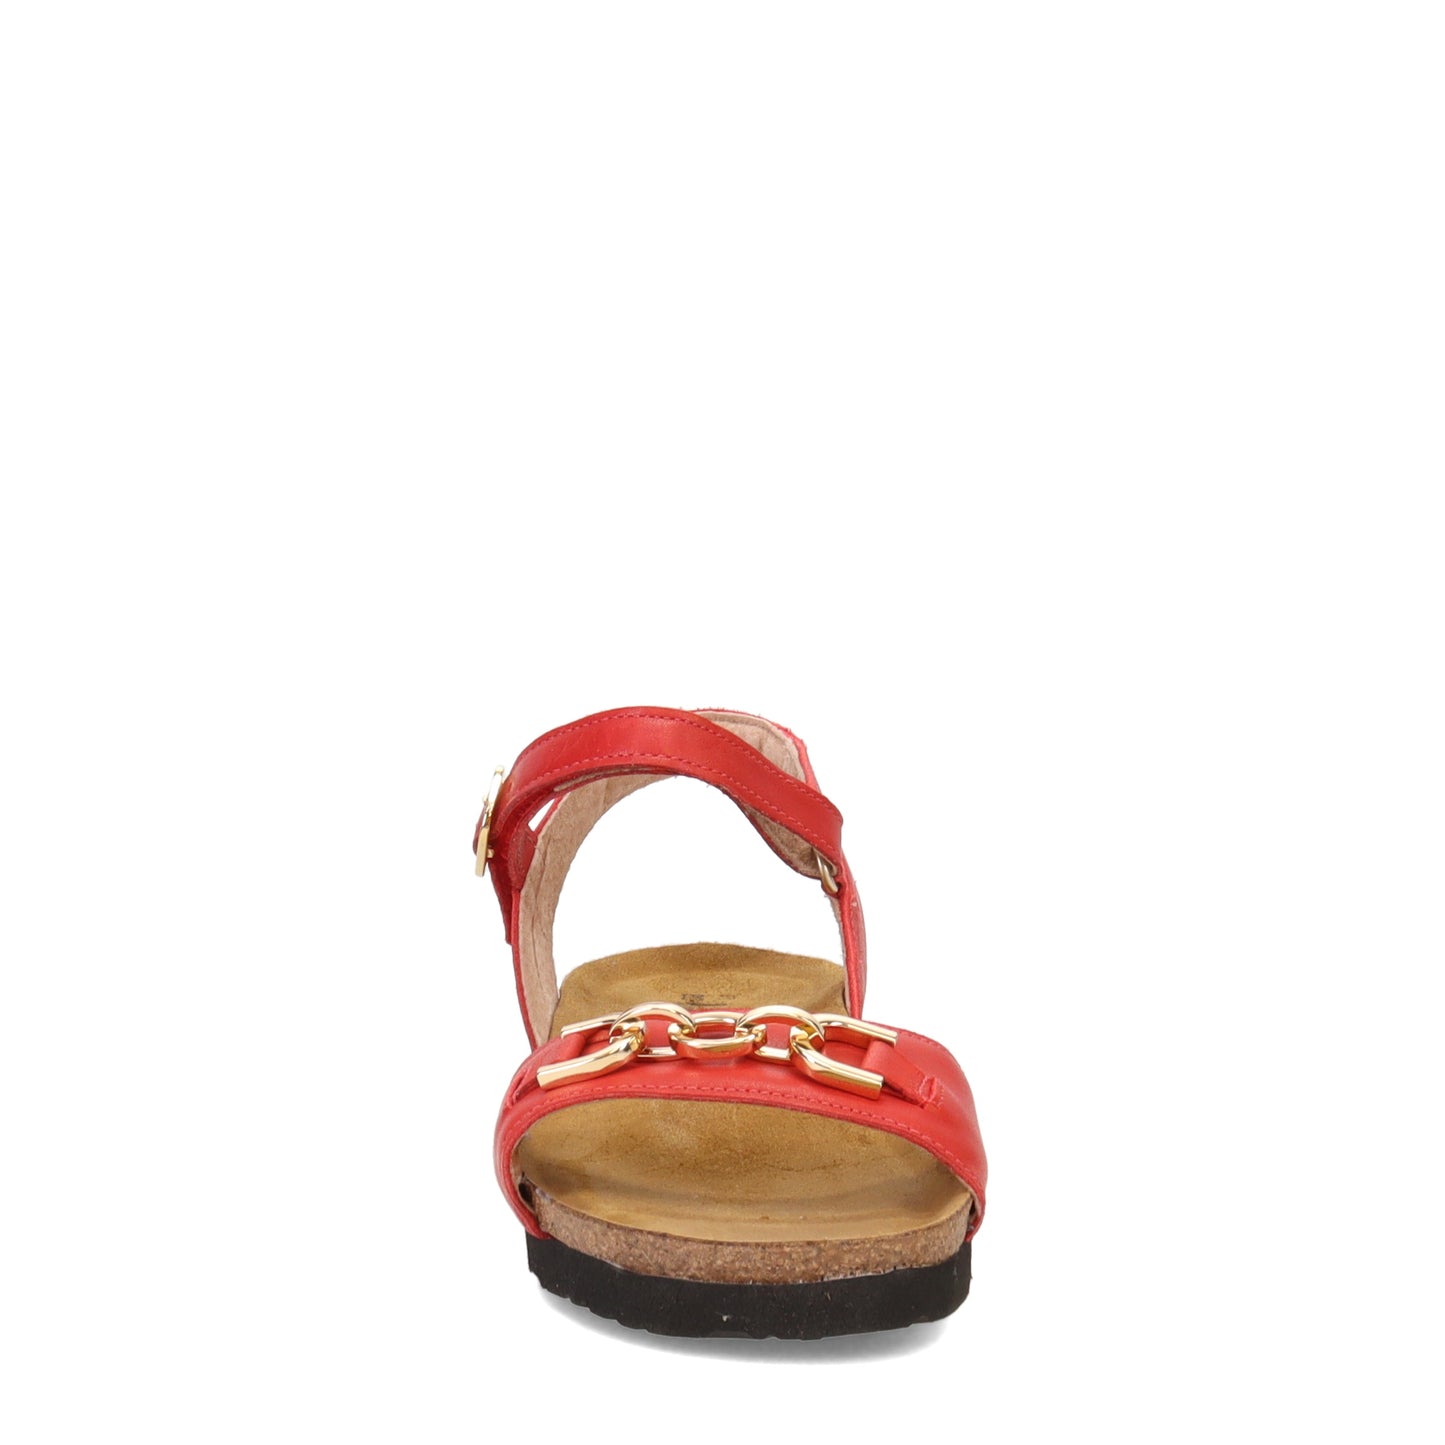 Peltz Shoes  Women's Naot Aubrey Sandal Kiss Red 4472-C60